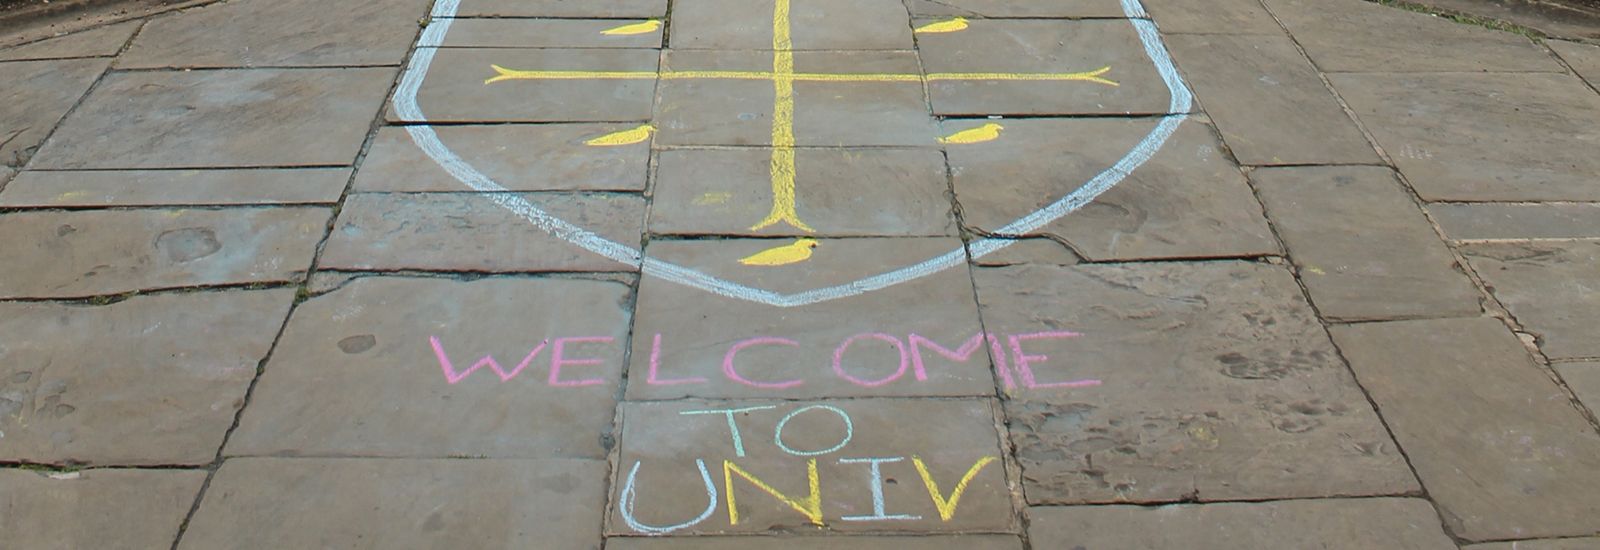 Welcome to University College graffiti